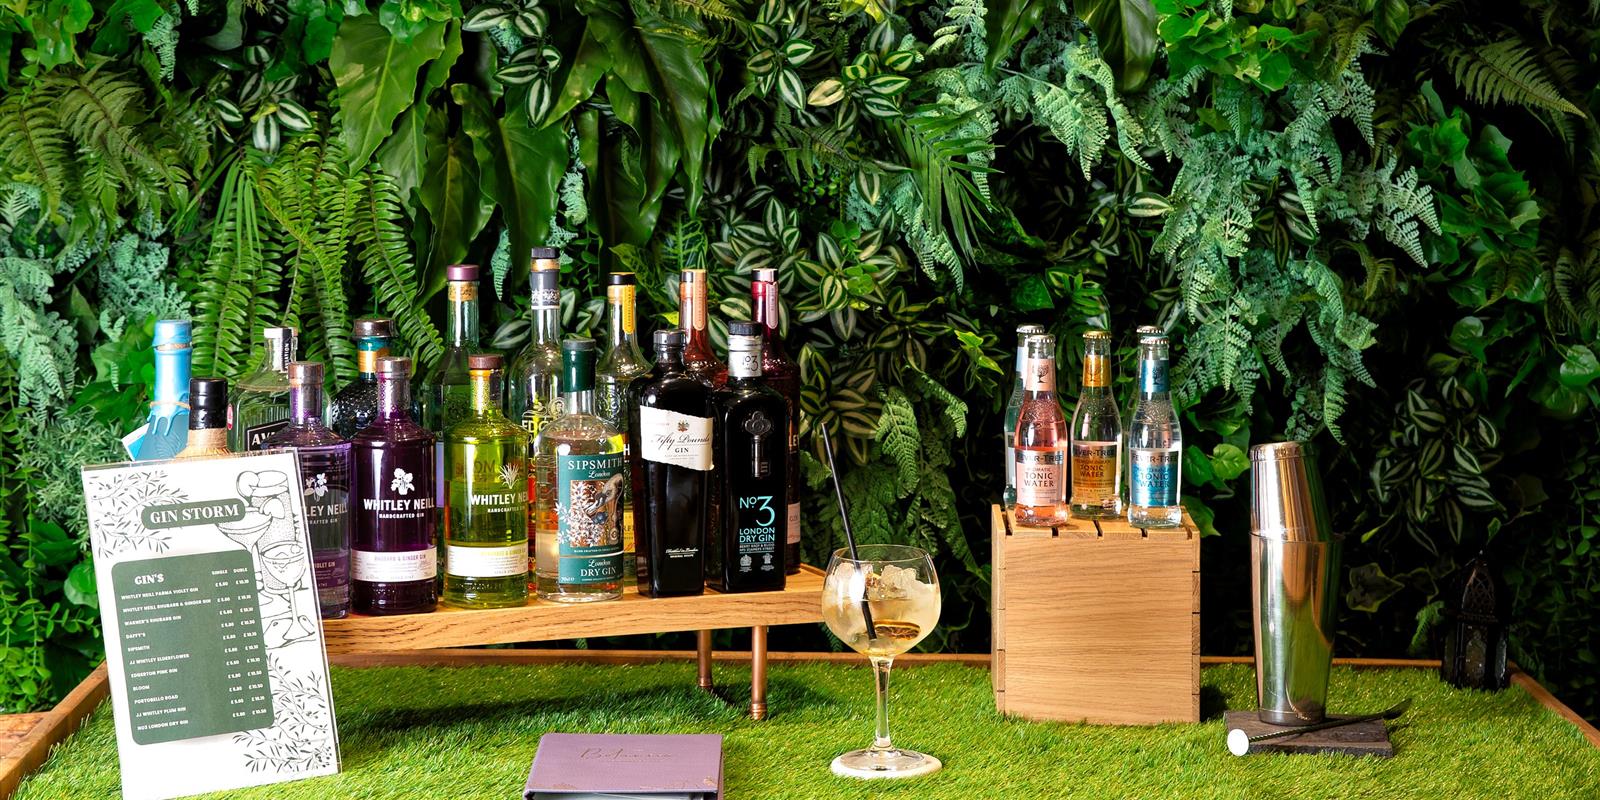 botanica bar gin selection in London city centre